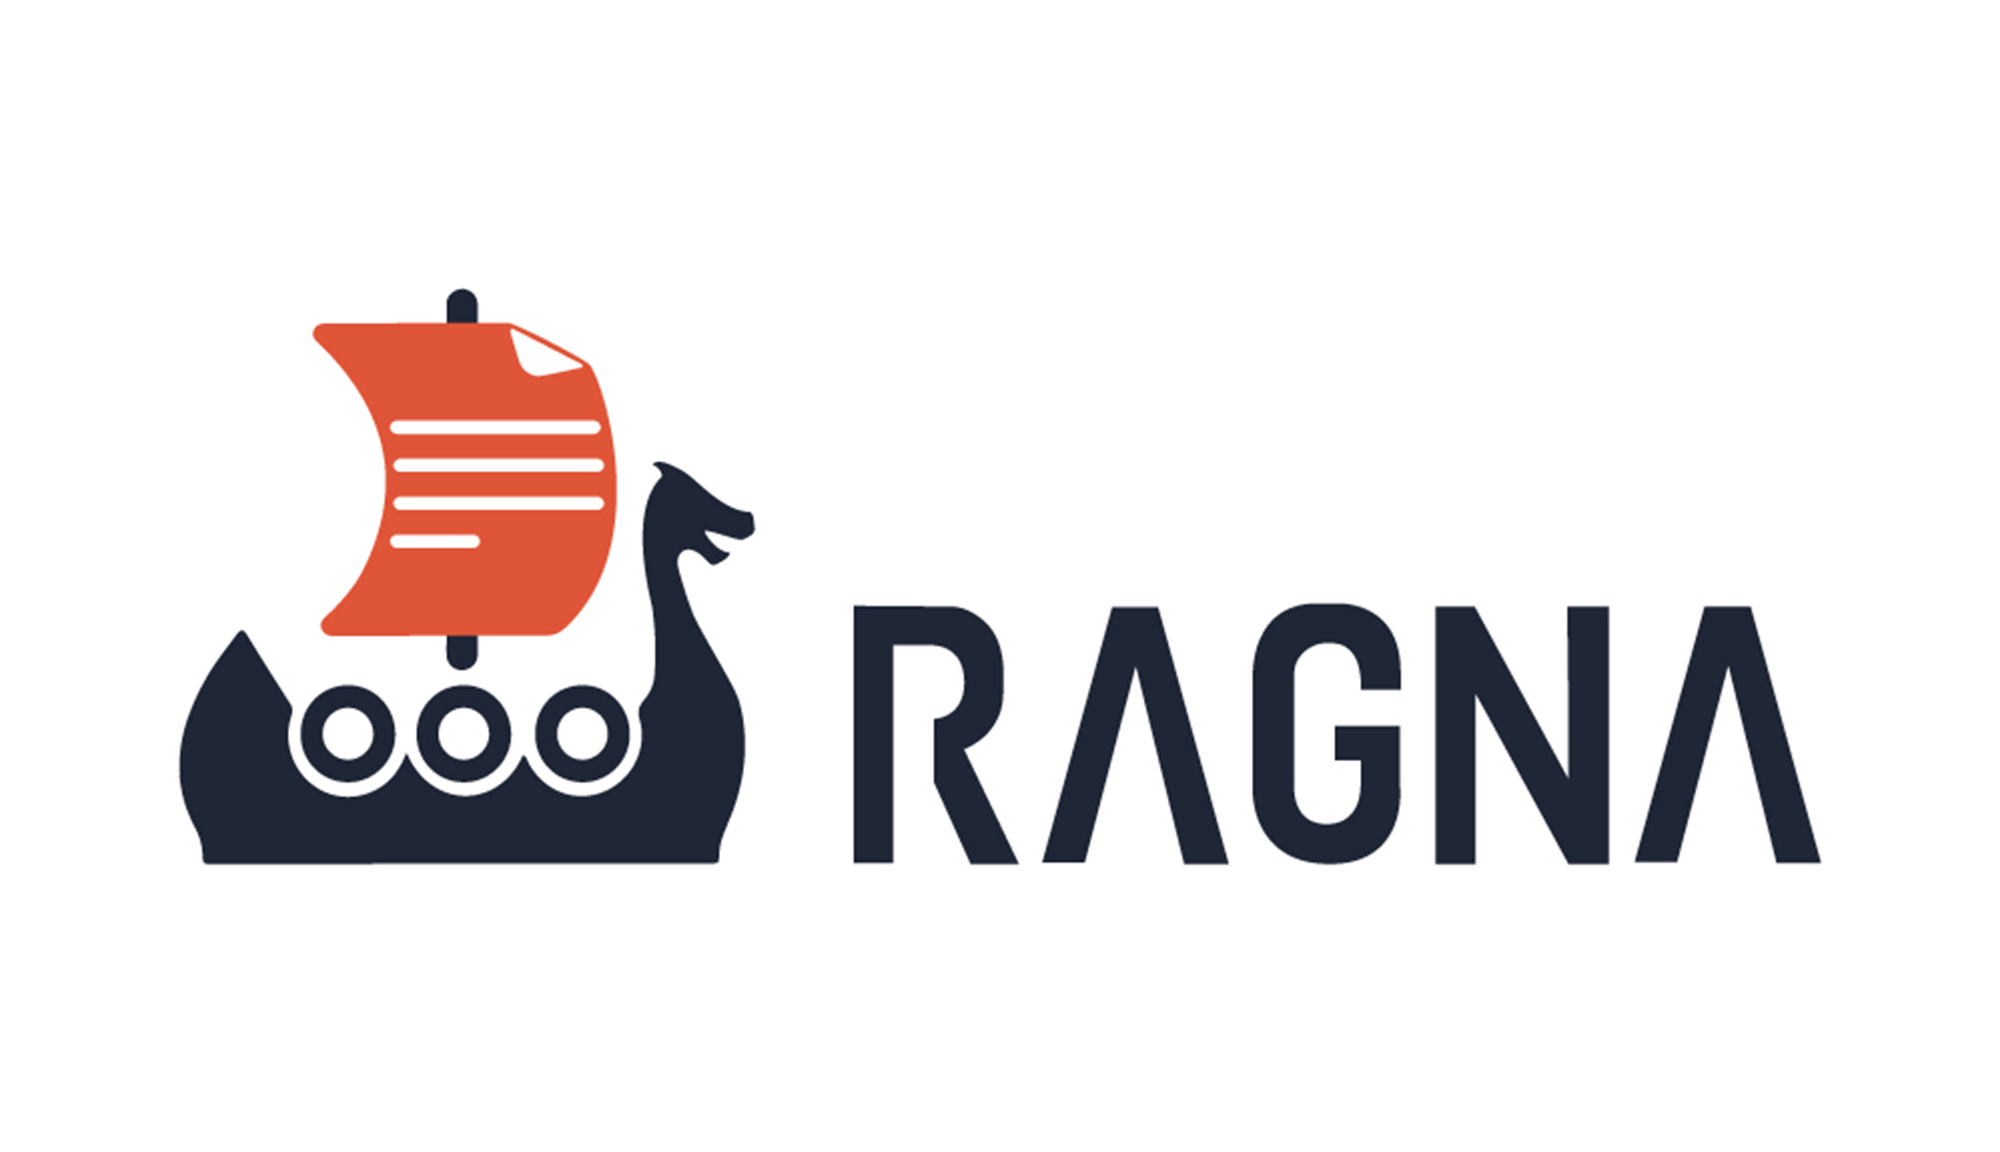 Image of the Ragna logo